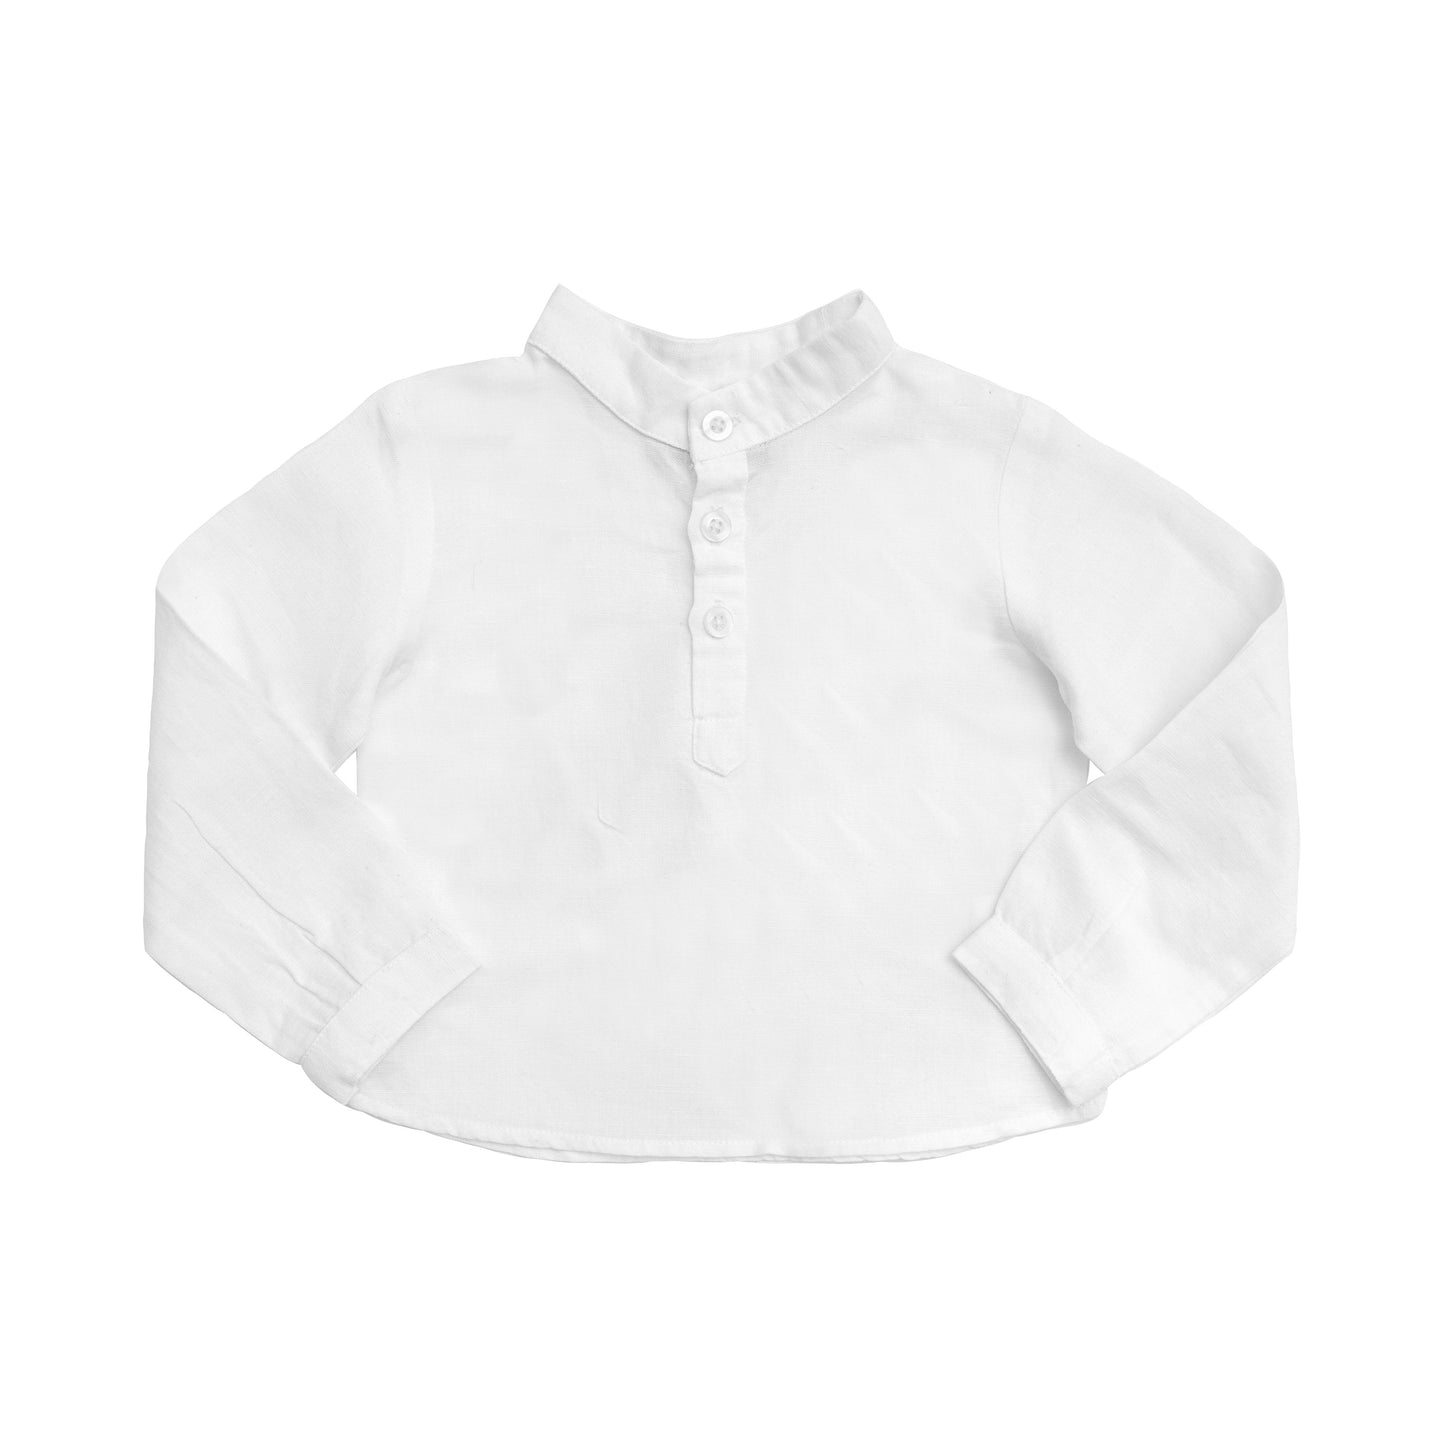 Boys French collar shirt | white linen